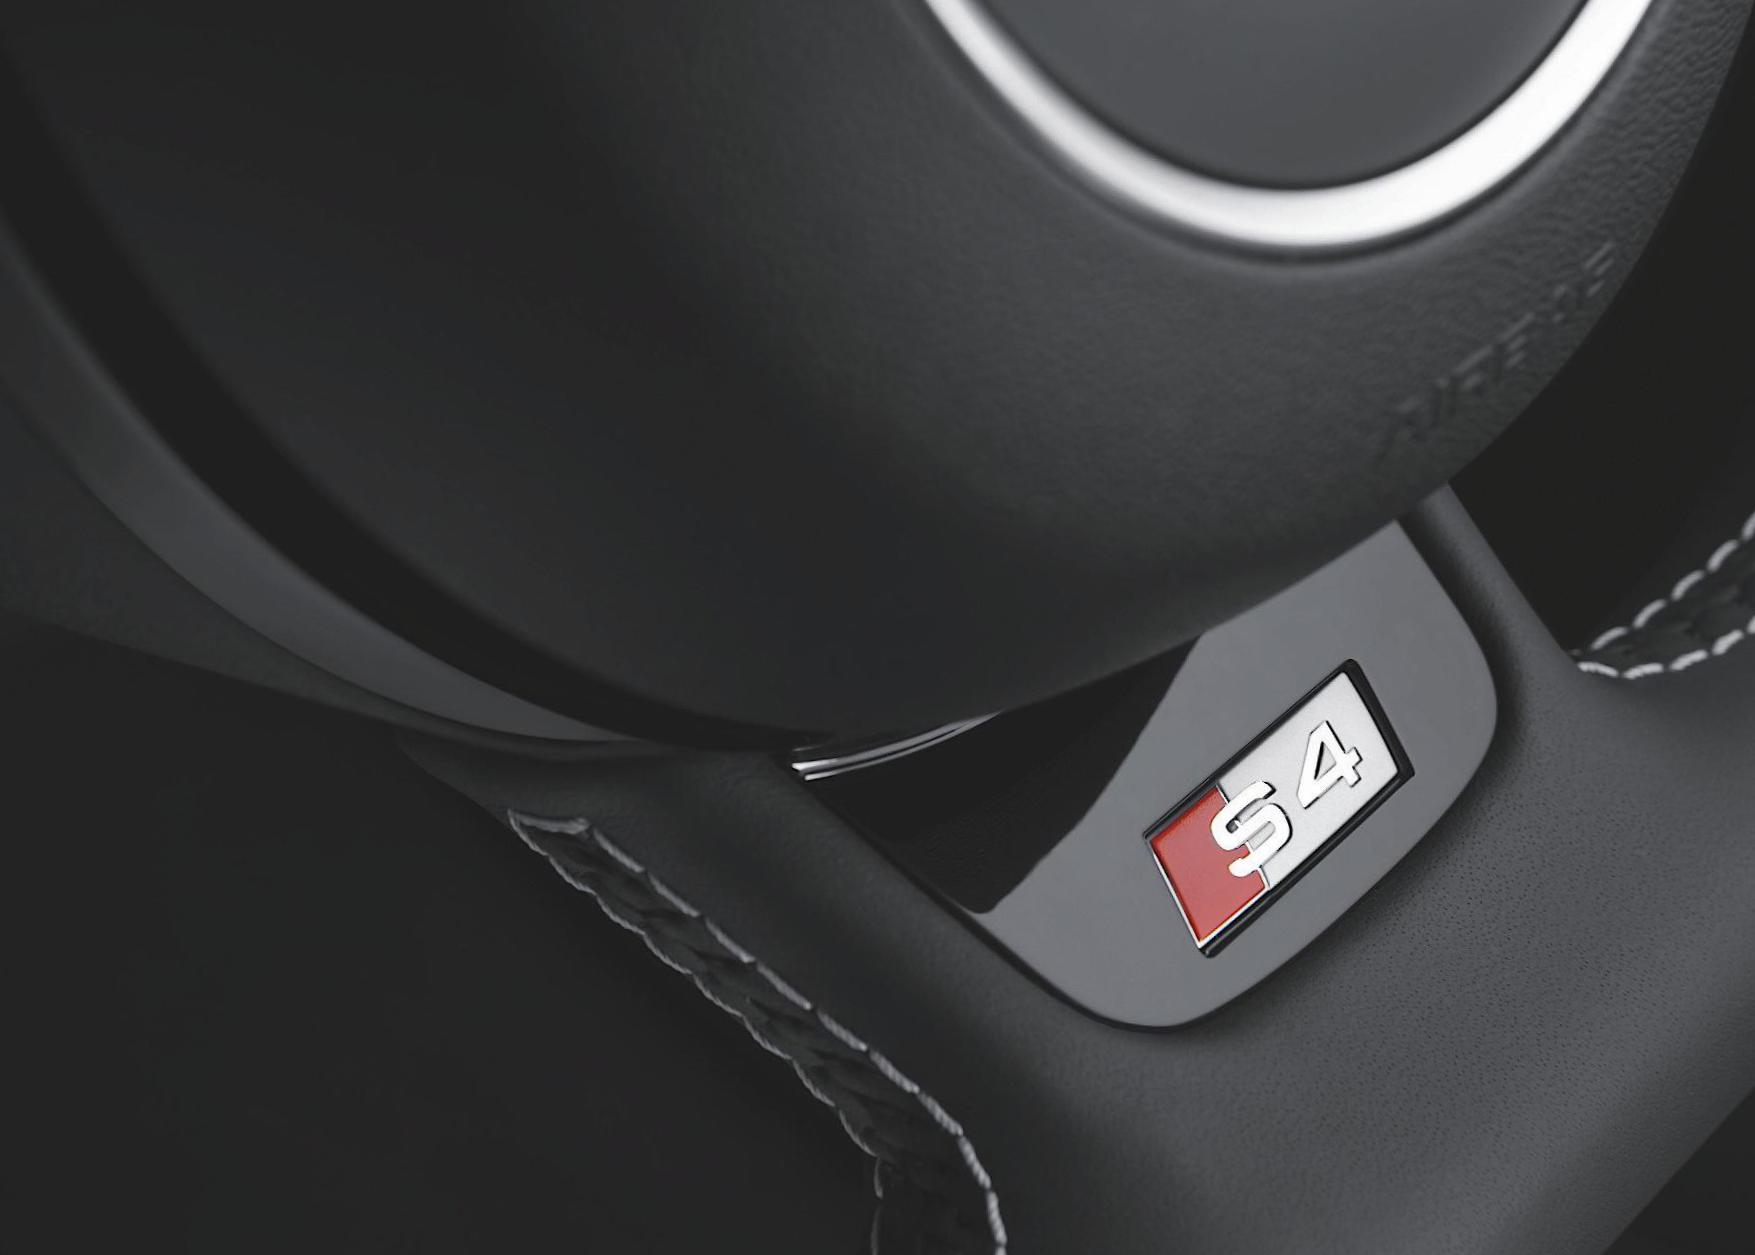 S4 Avant Audi review minivan